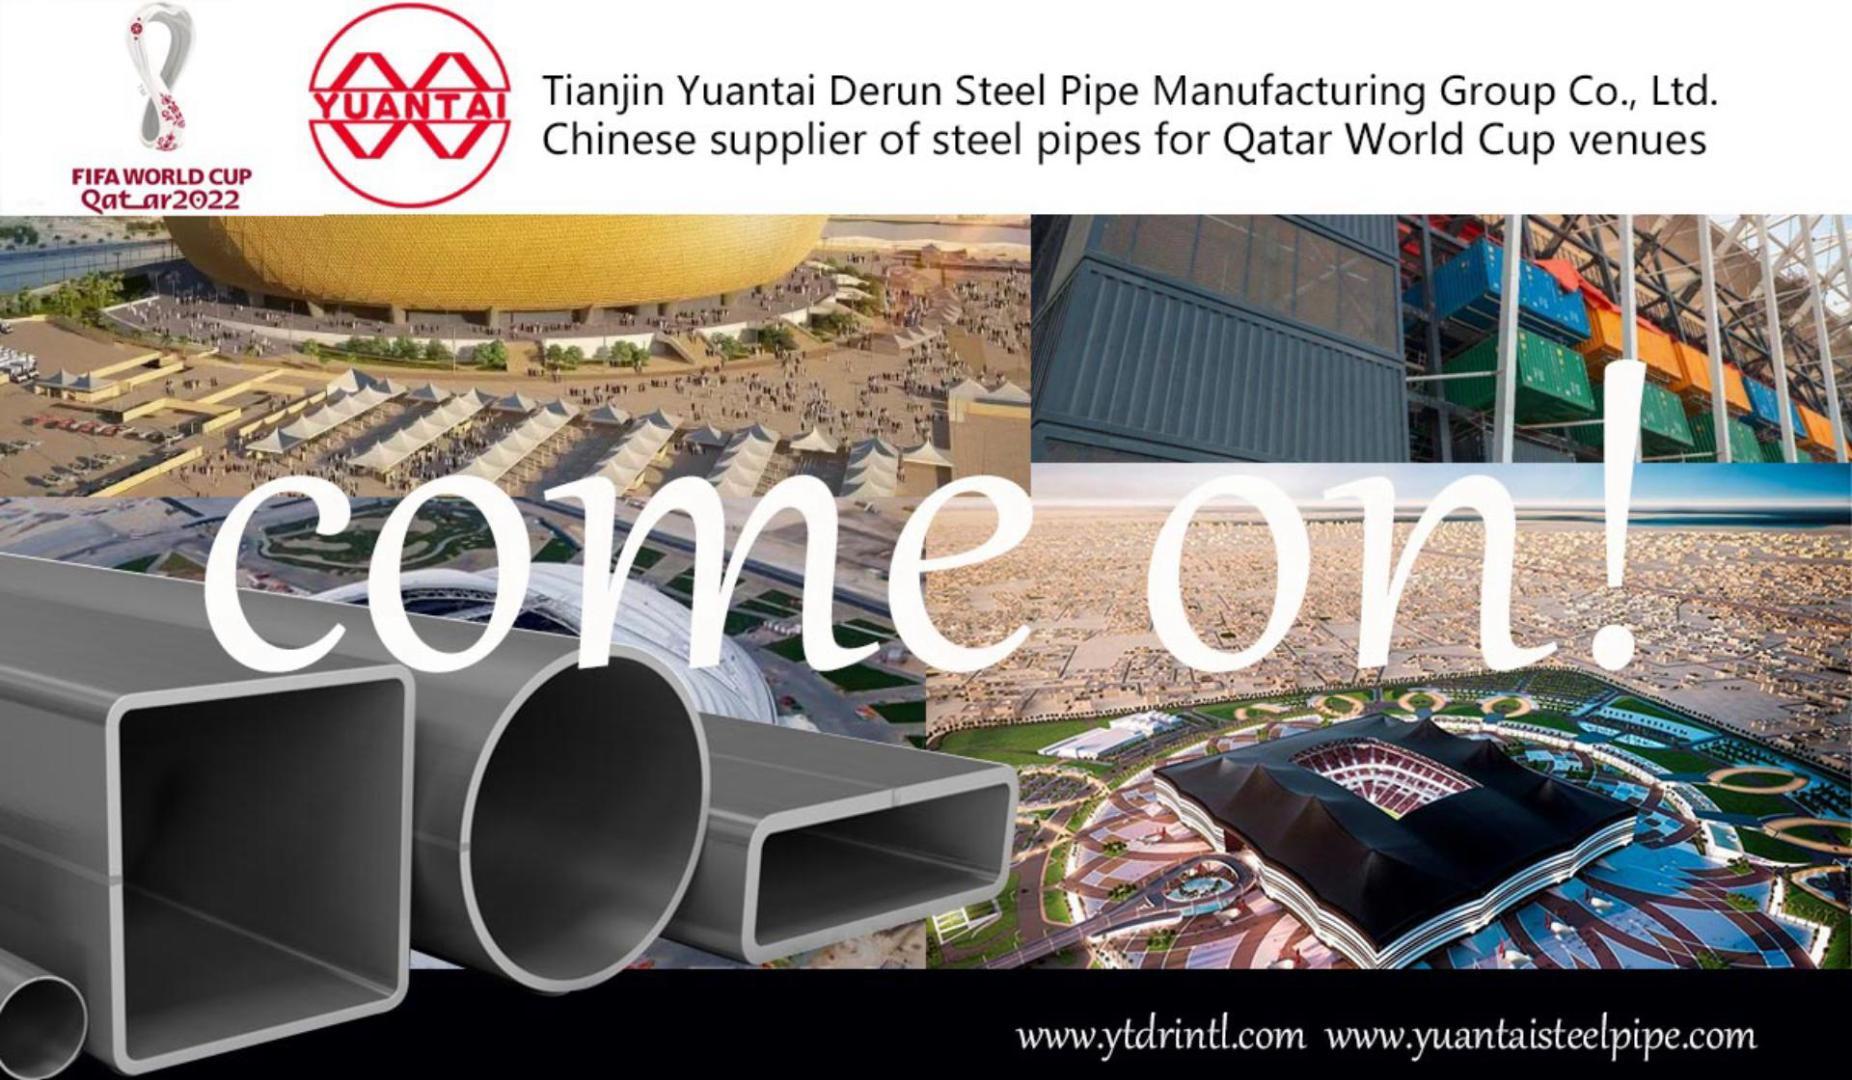 Tianjin Yuantai Derun Steel Pipe Manufacturing Group Co., Ltd Qatar World Cup 2022 venue project supplier